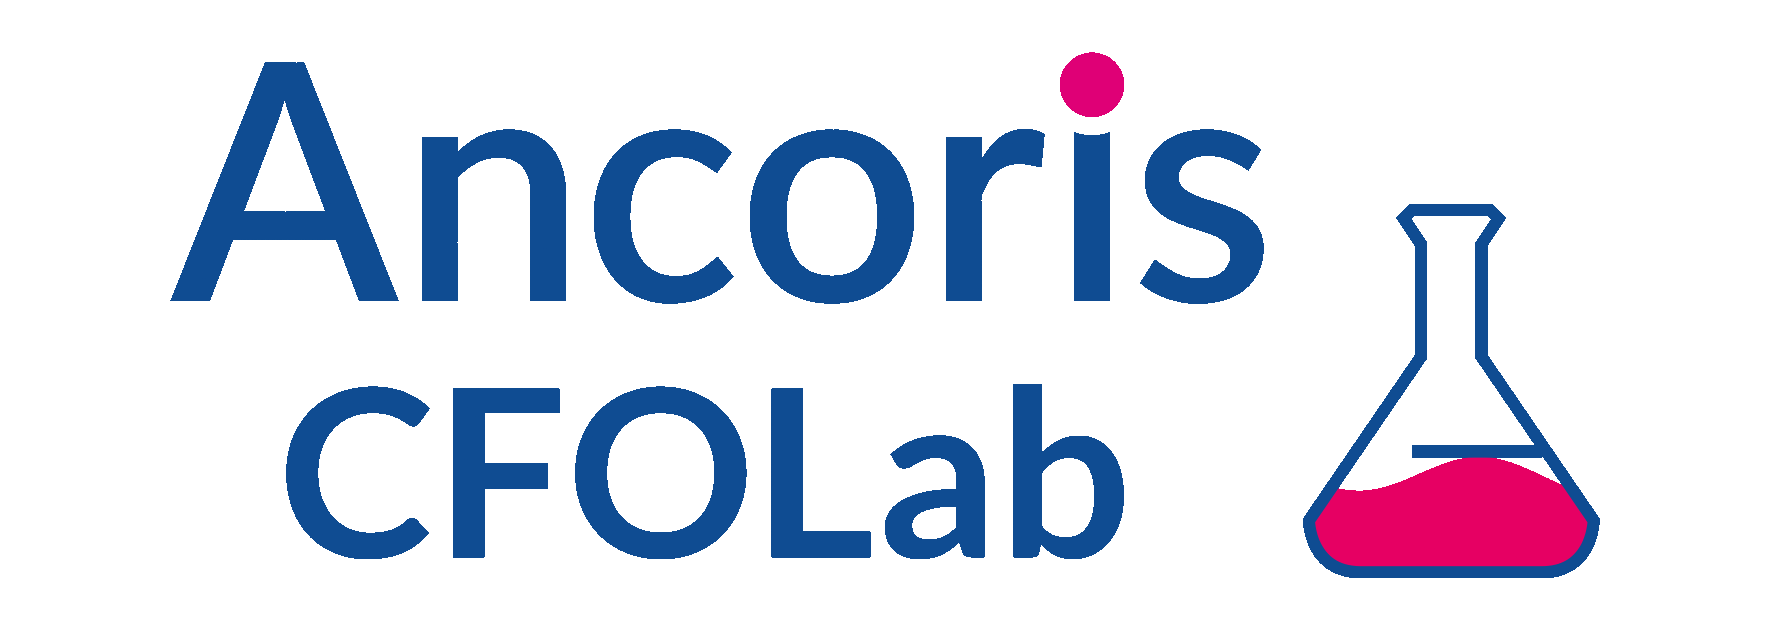 CFOLab Logo